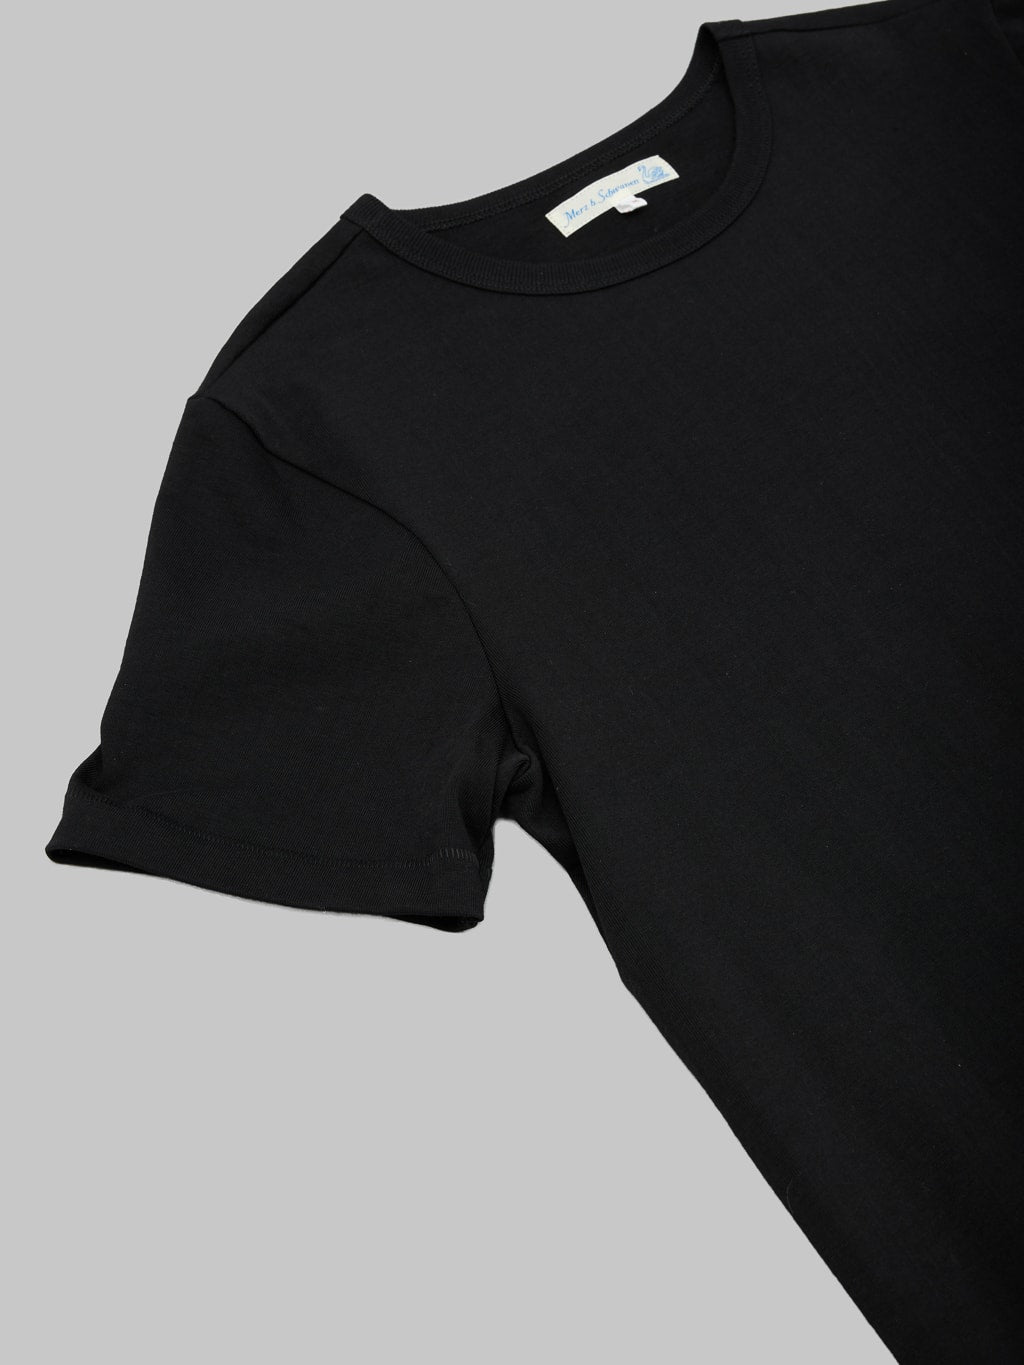 merz b schwanen good originals loopwheeled Tshirt classic fit black 100 cotton